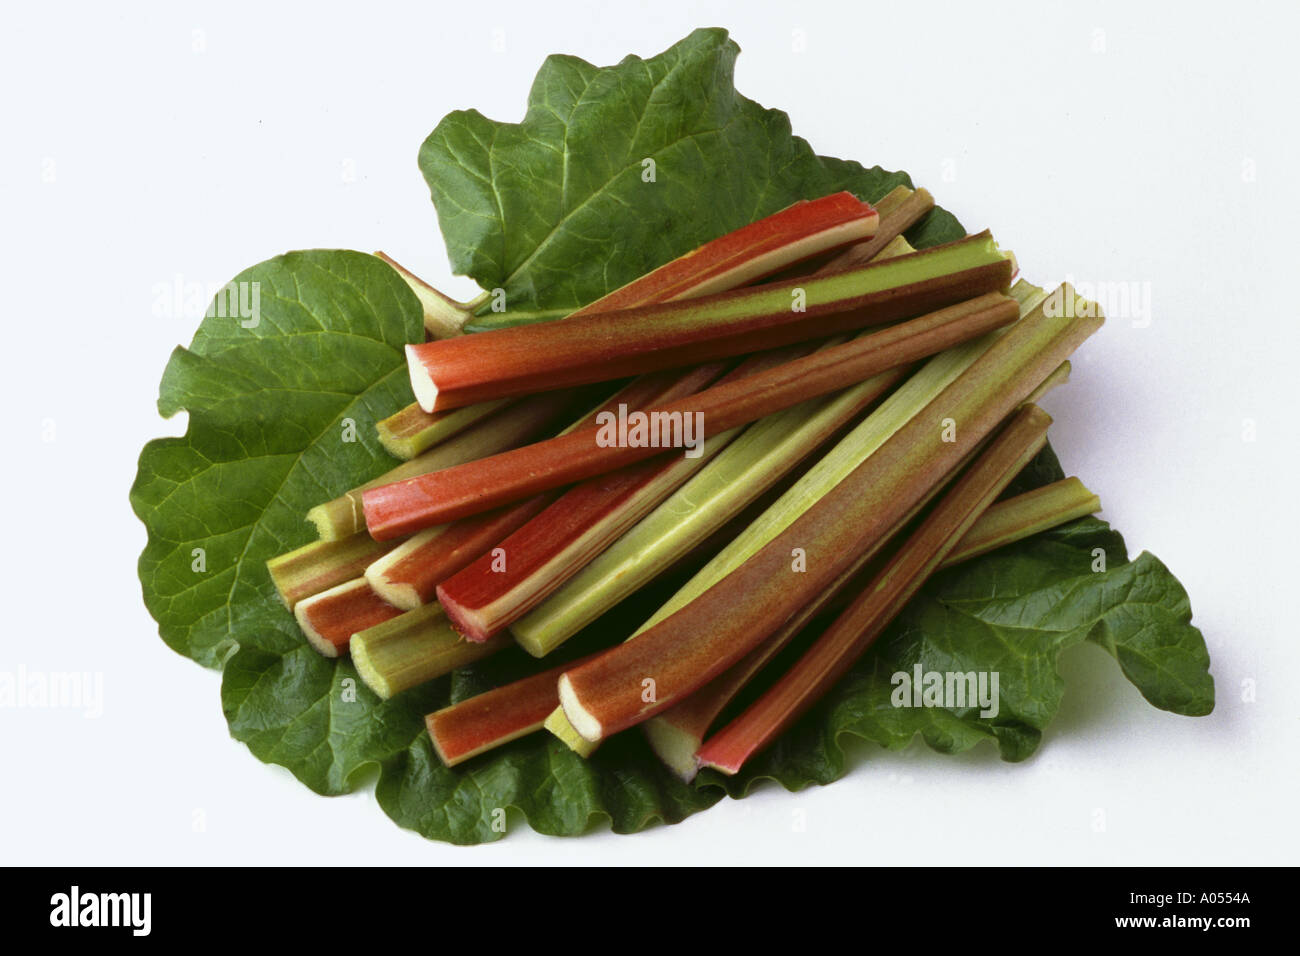 vegetable fruit food rhubarb Rheum rhaponticum Stock Photo